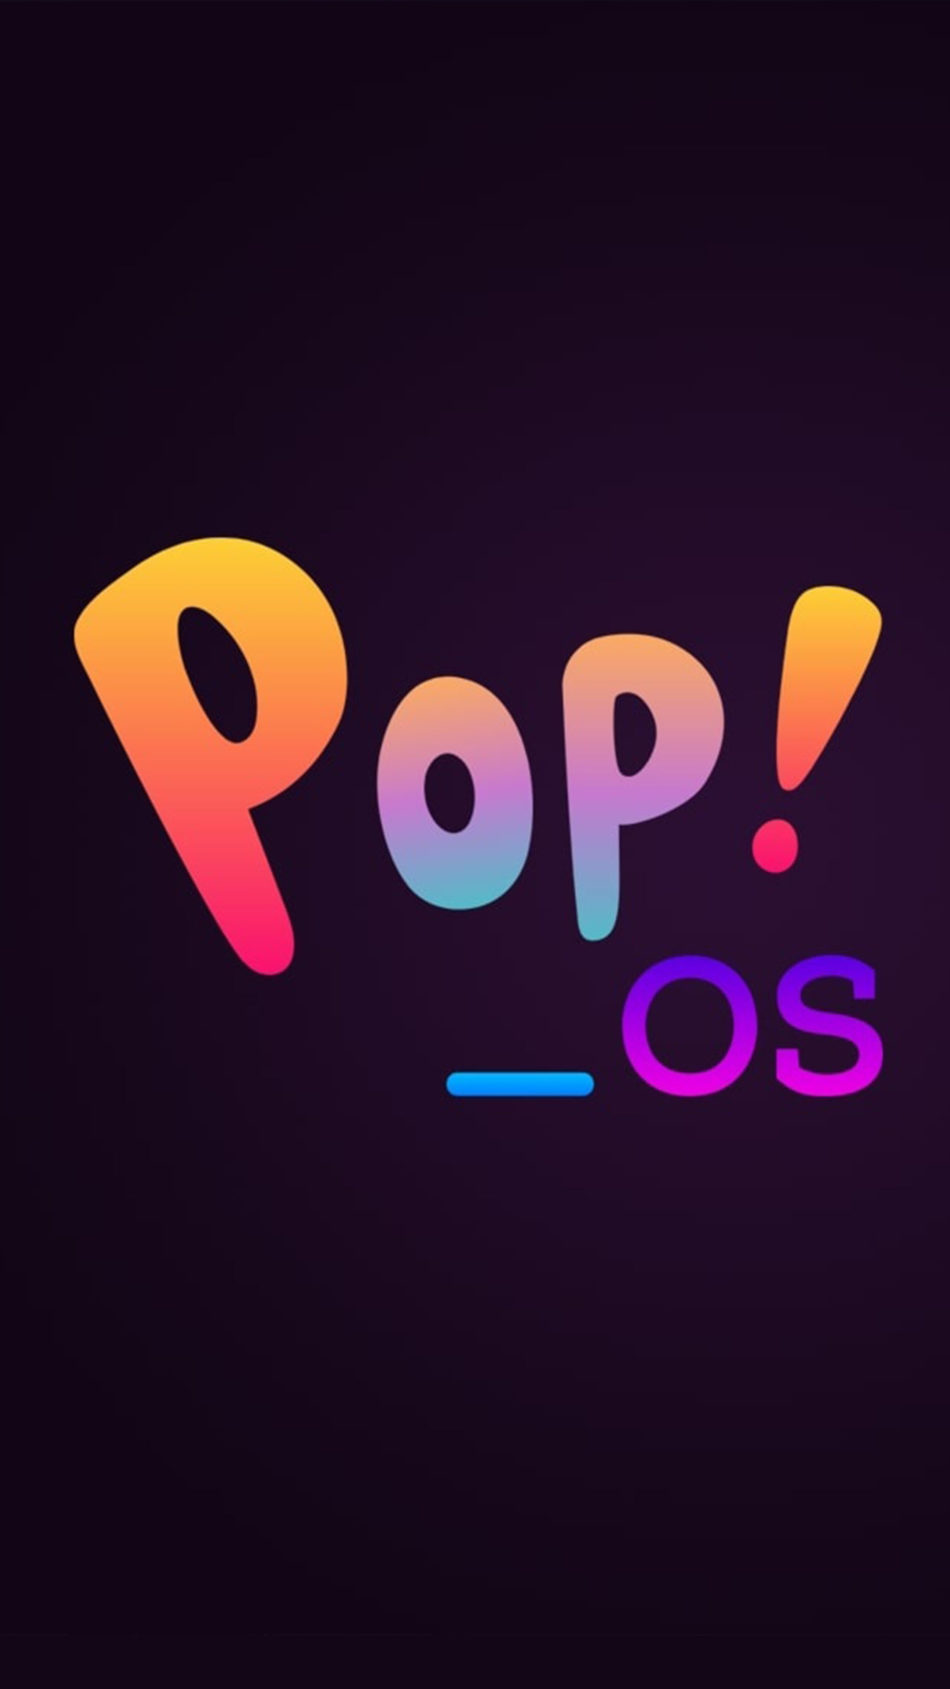 Pop OS Linux Logo 4K Ultra HD Mobile Wallpaper